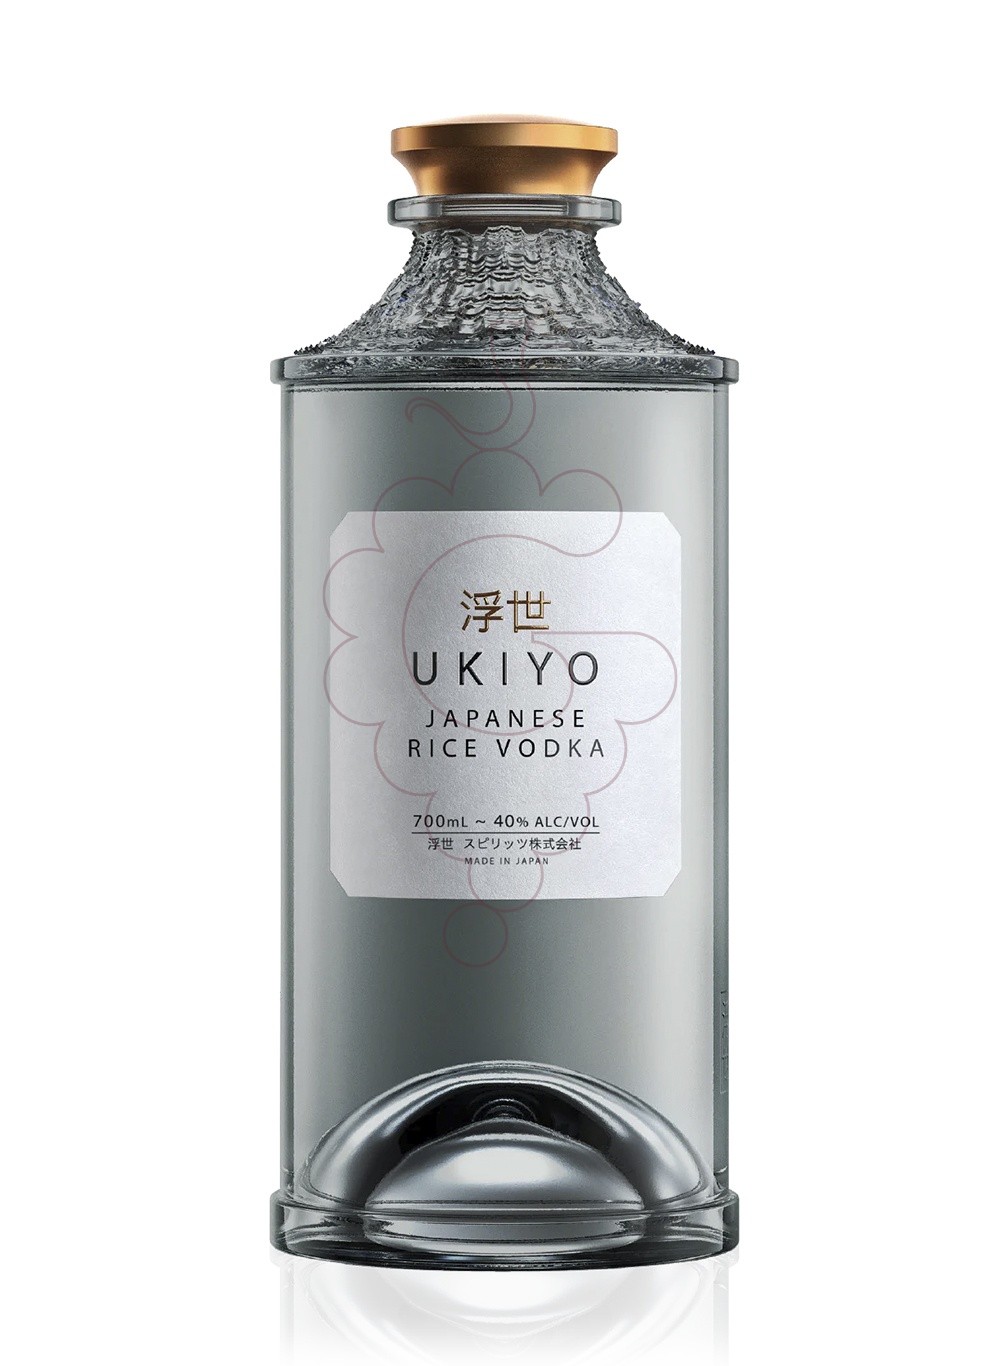 Foto Vodka Ukiyo Rice Vodka